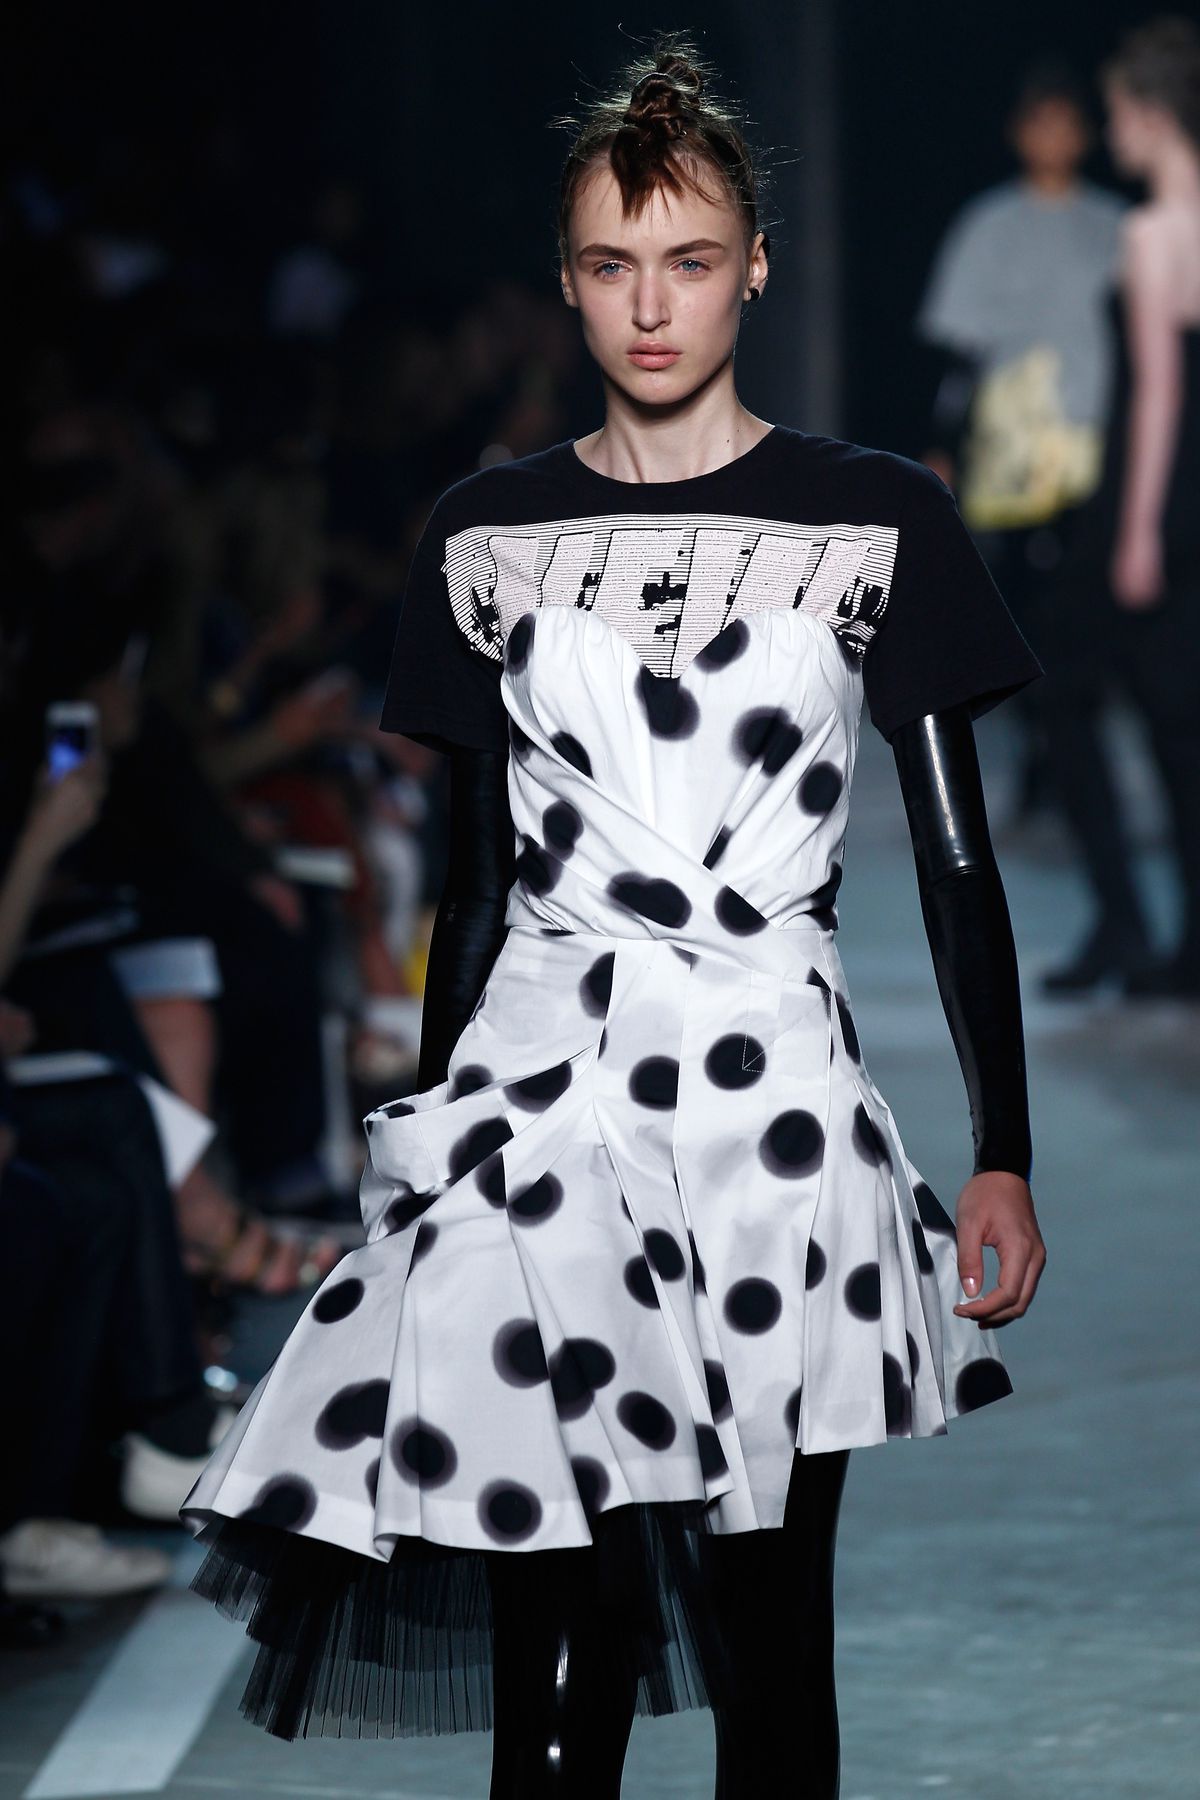 A model wears a latex bodysuit under a girly polka dot dress.